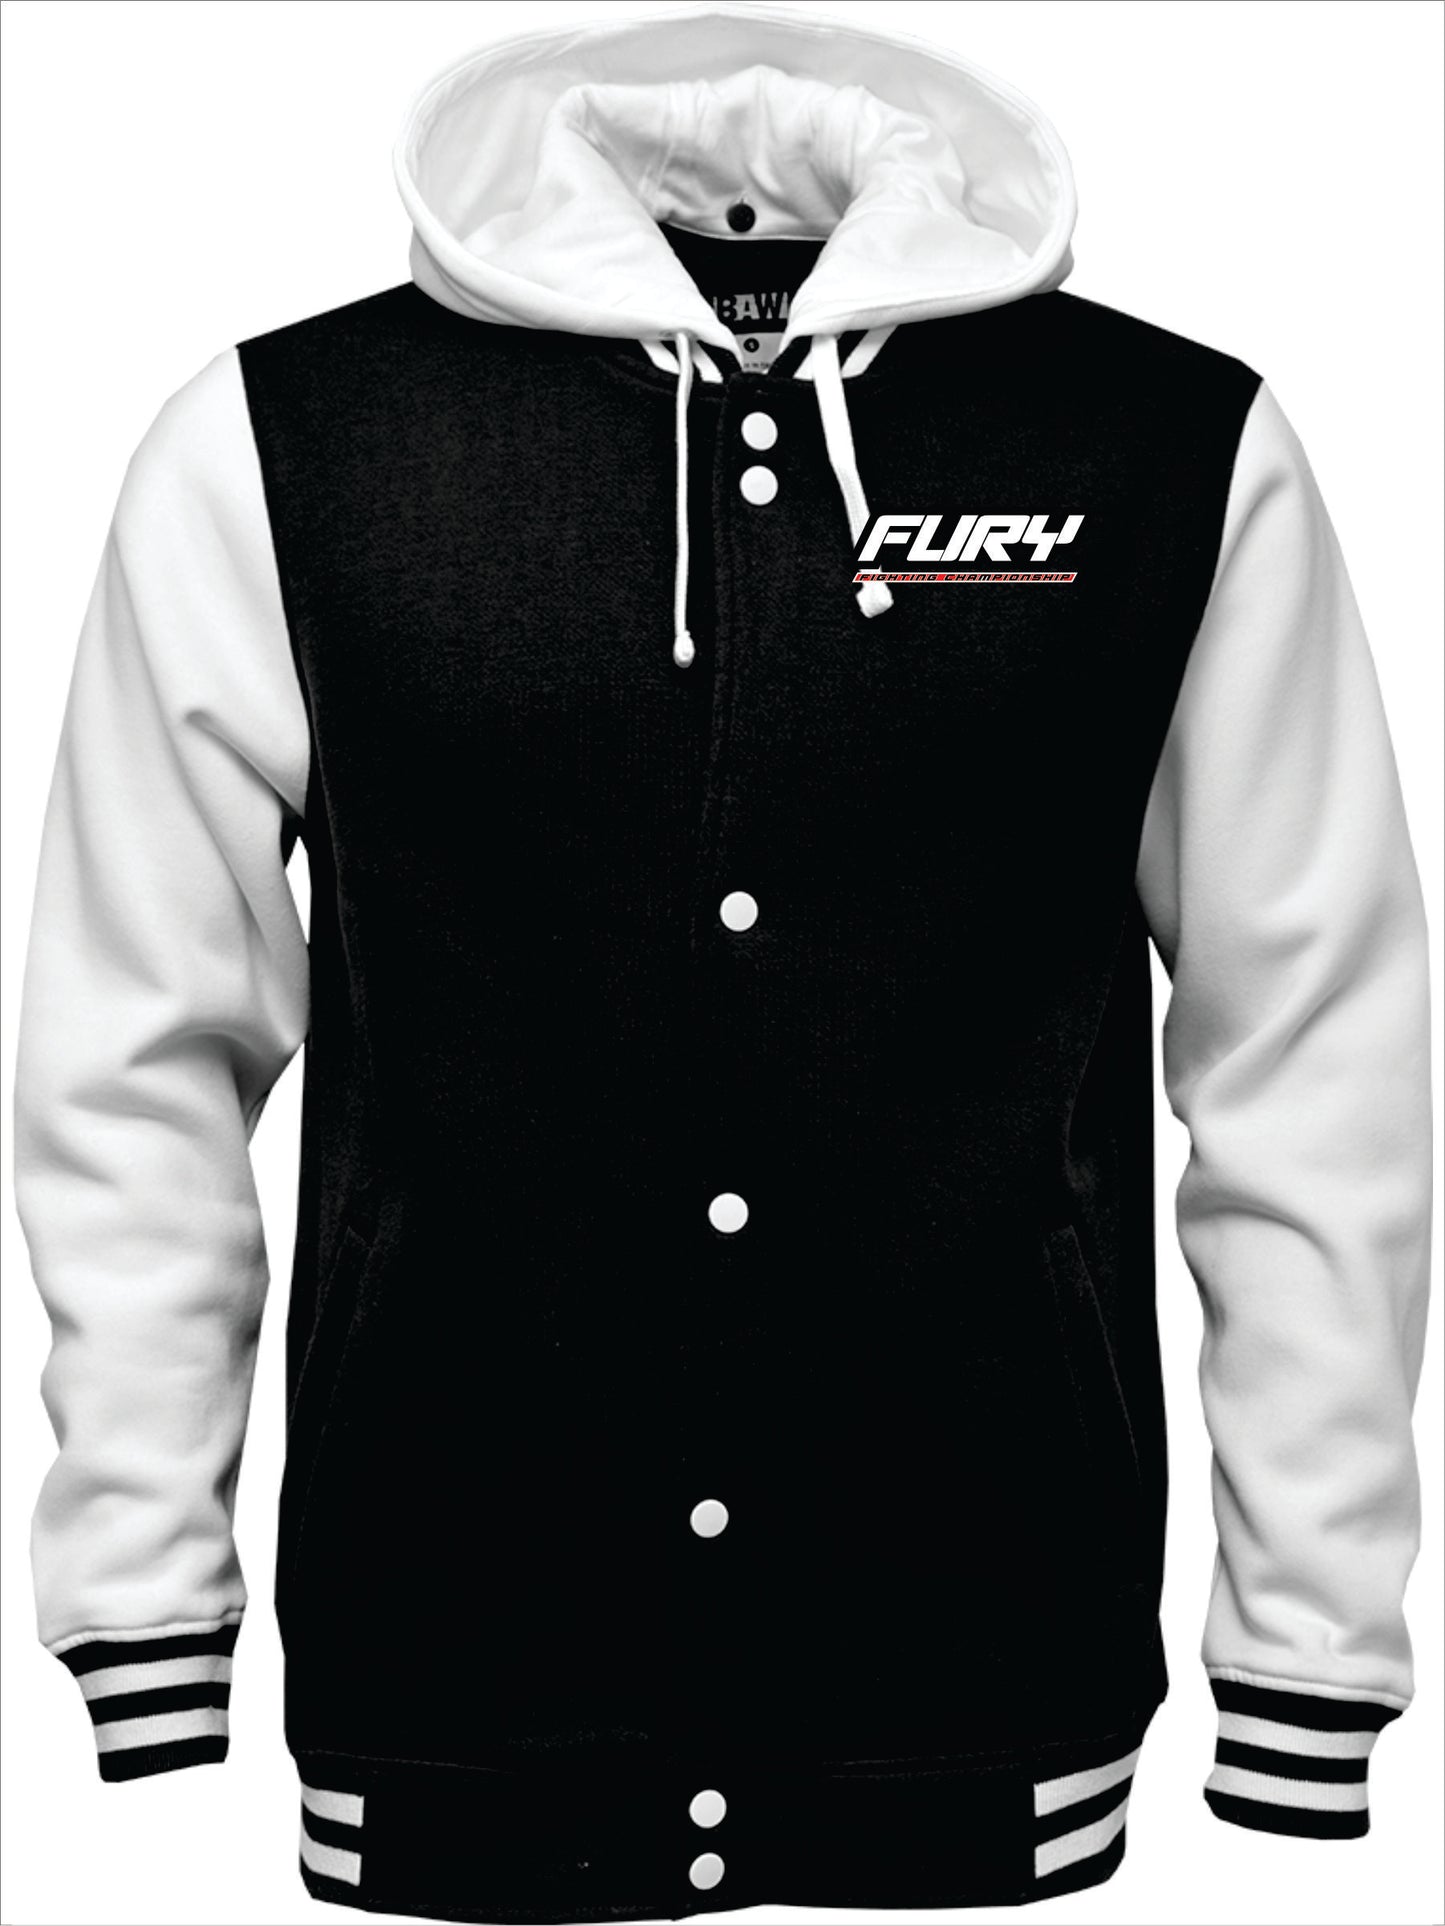 Fury FC Embroidered Letterman Jacket